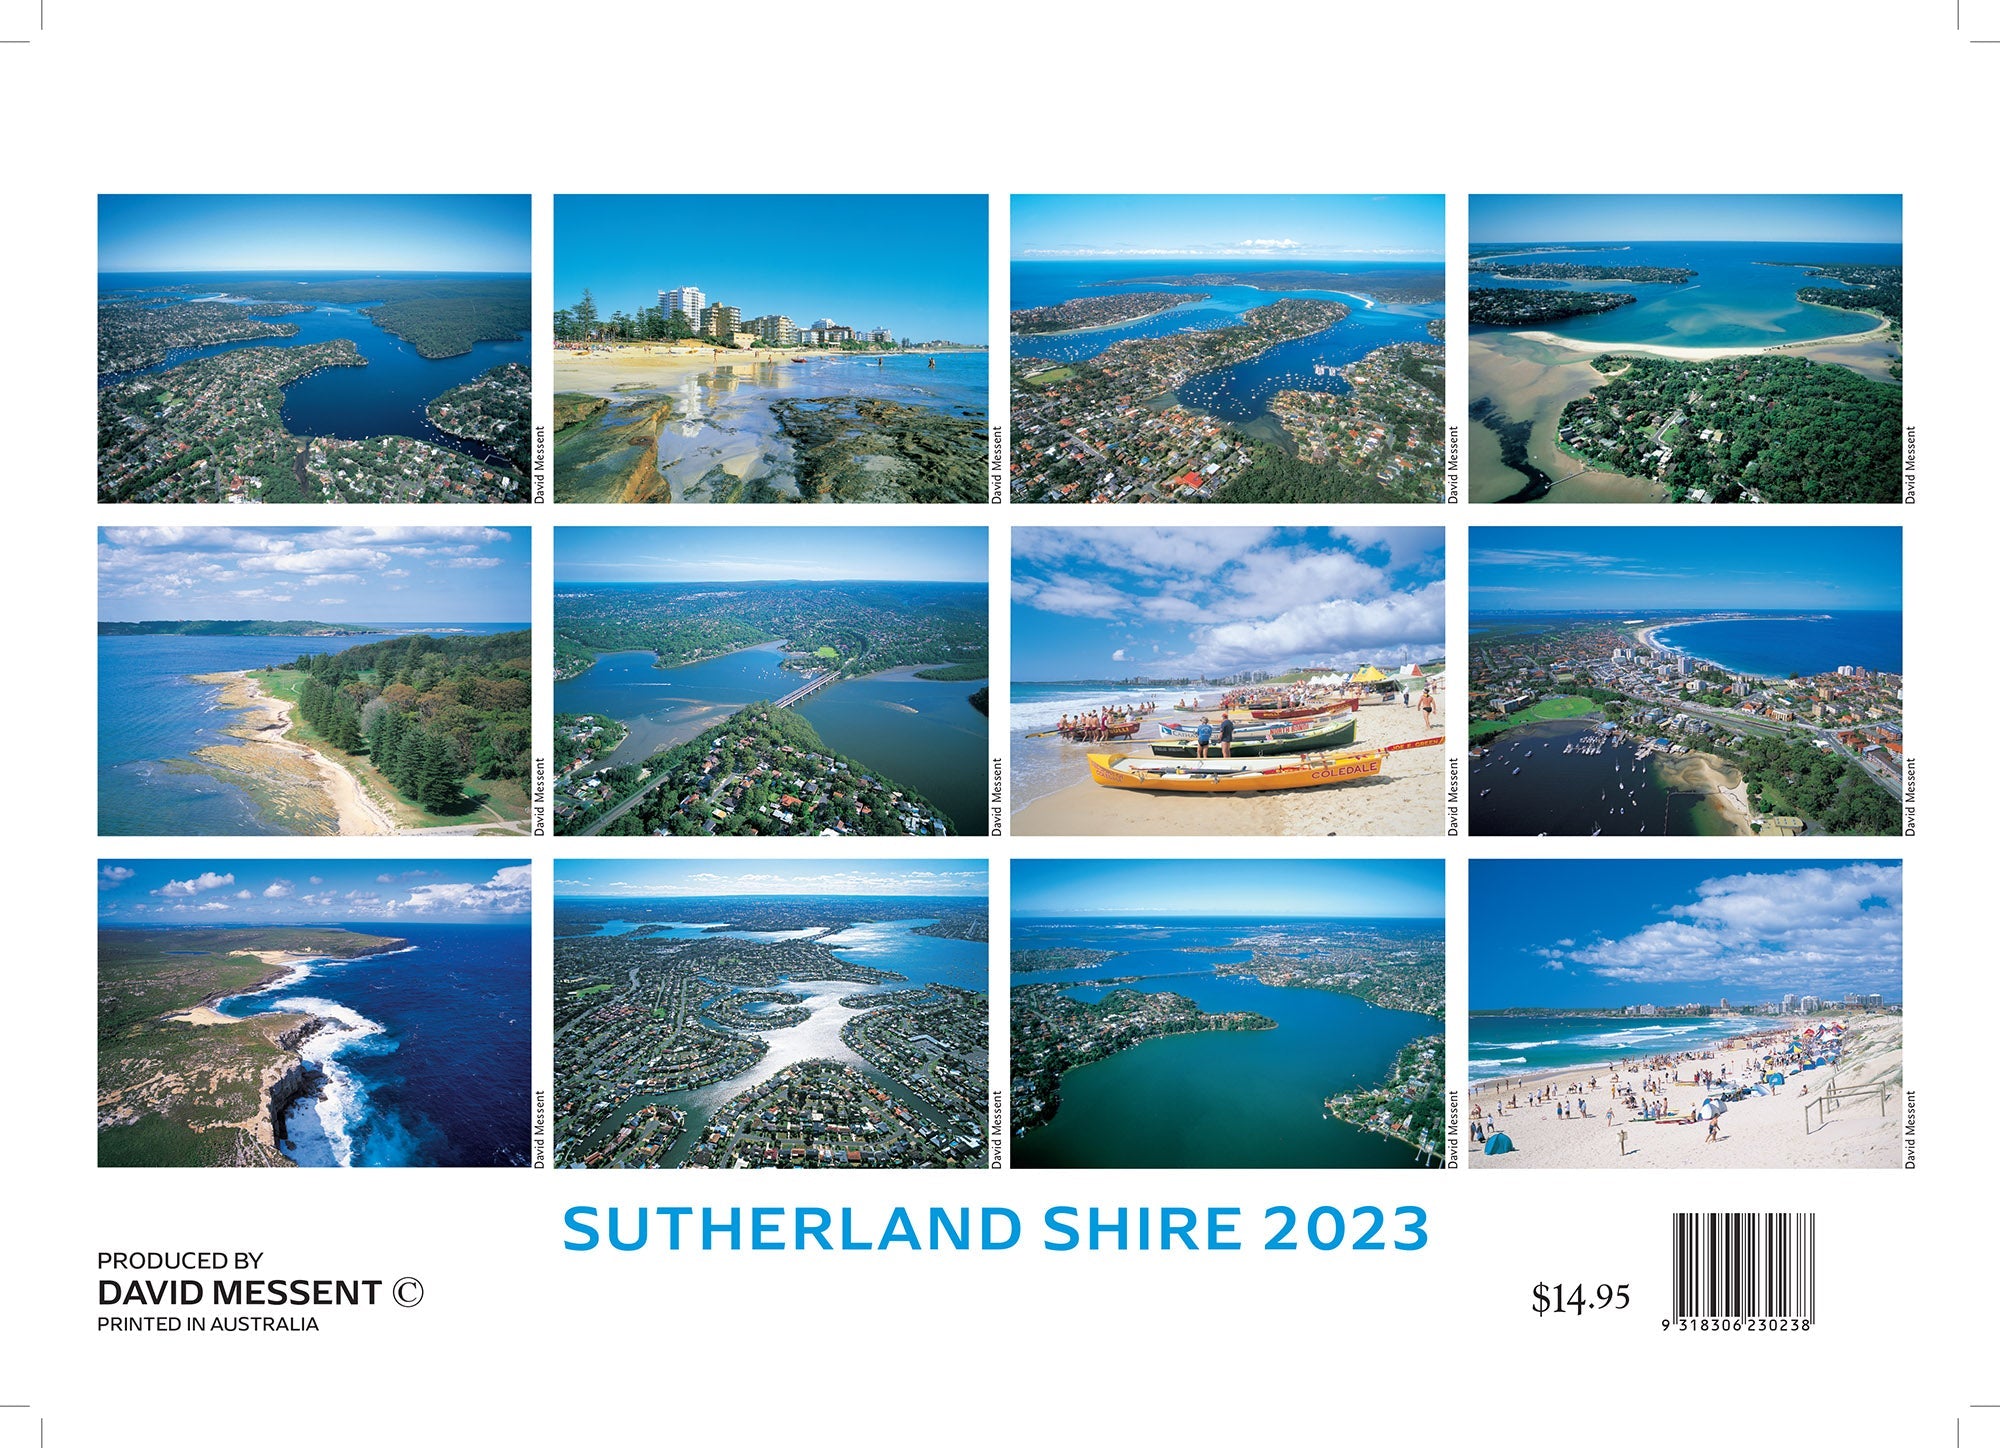 2023 Sutherland Shire by David Messent - Horizontal Wall Calendar